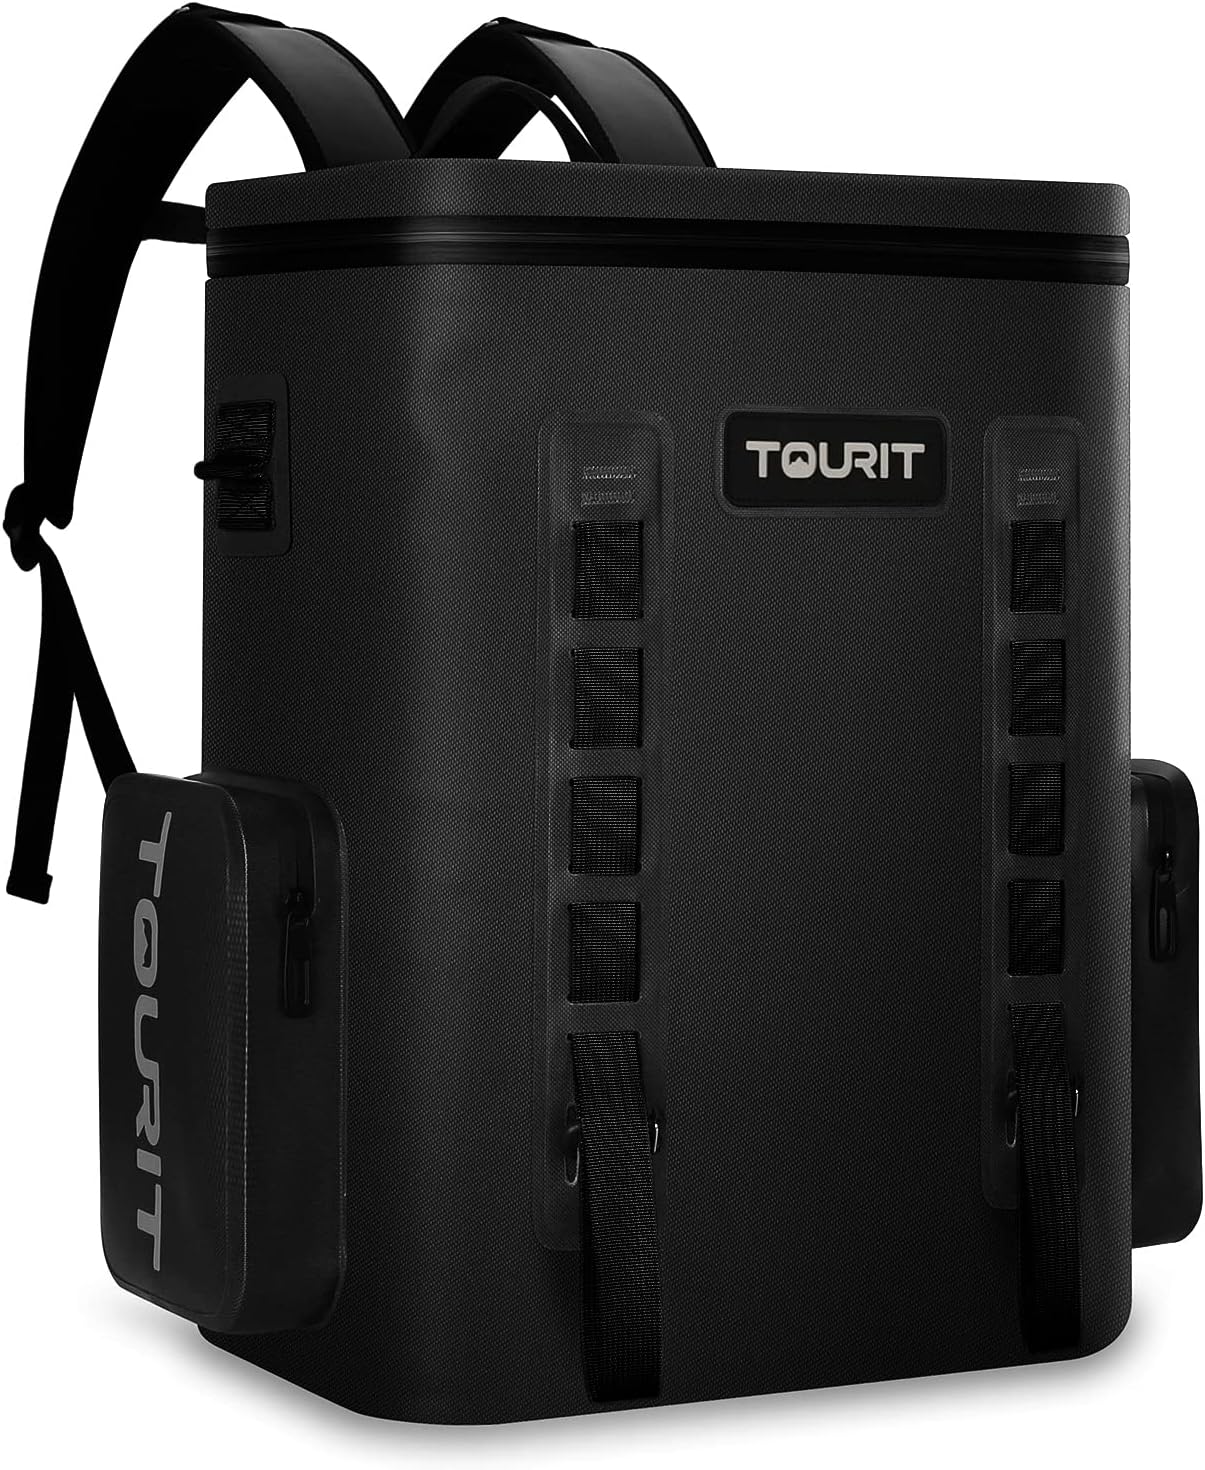  TOURIT Leak-Proof Soft Sided Cooler 